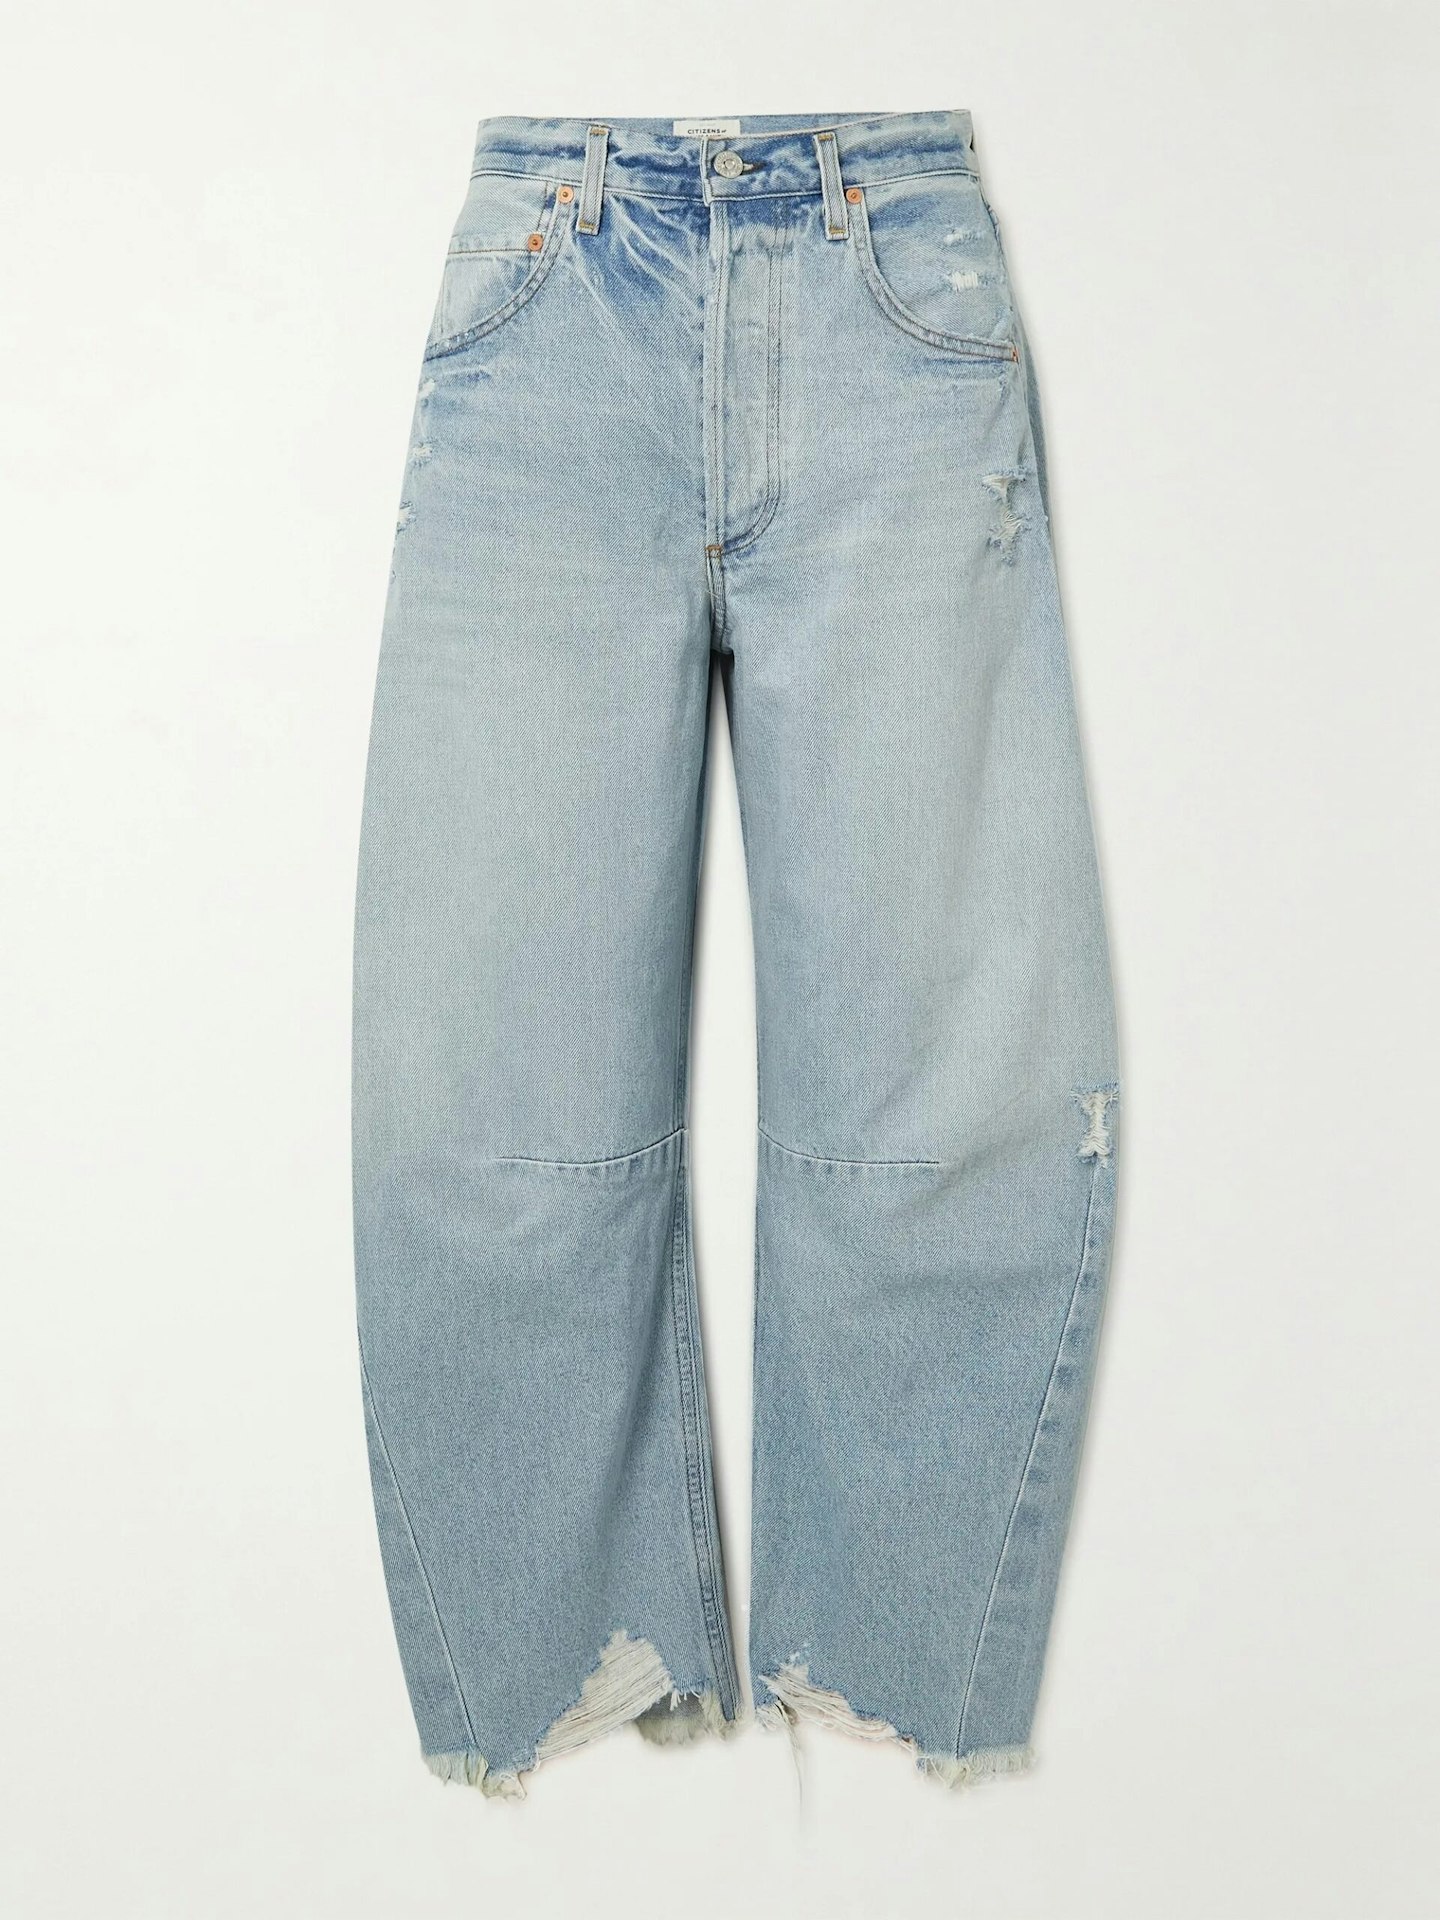 CItenzens of humanity sienna miller jeans